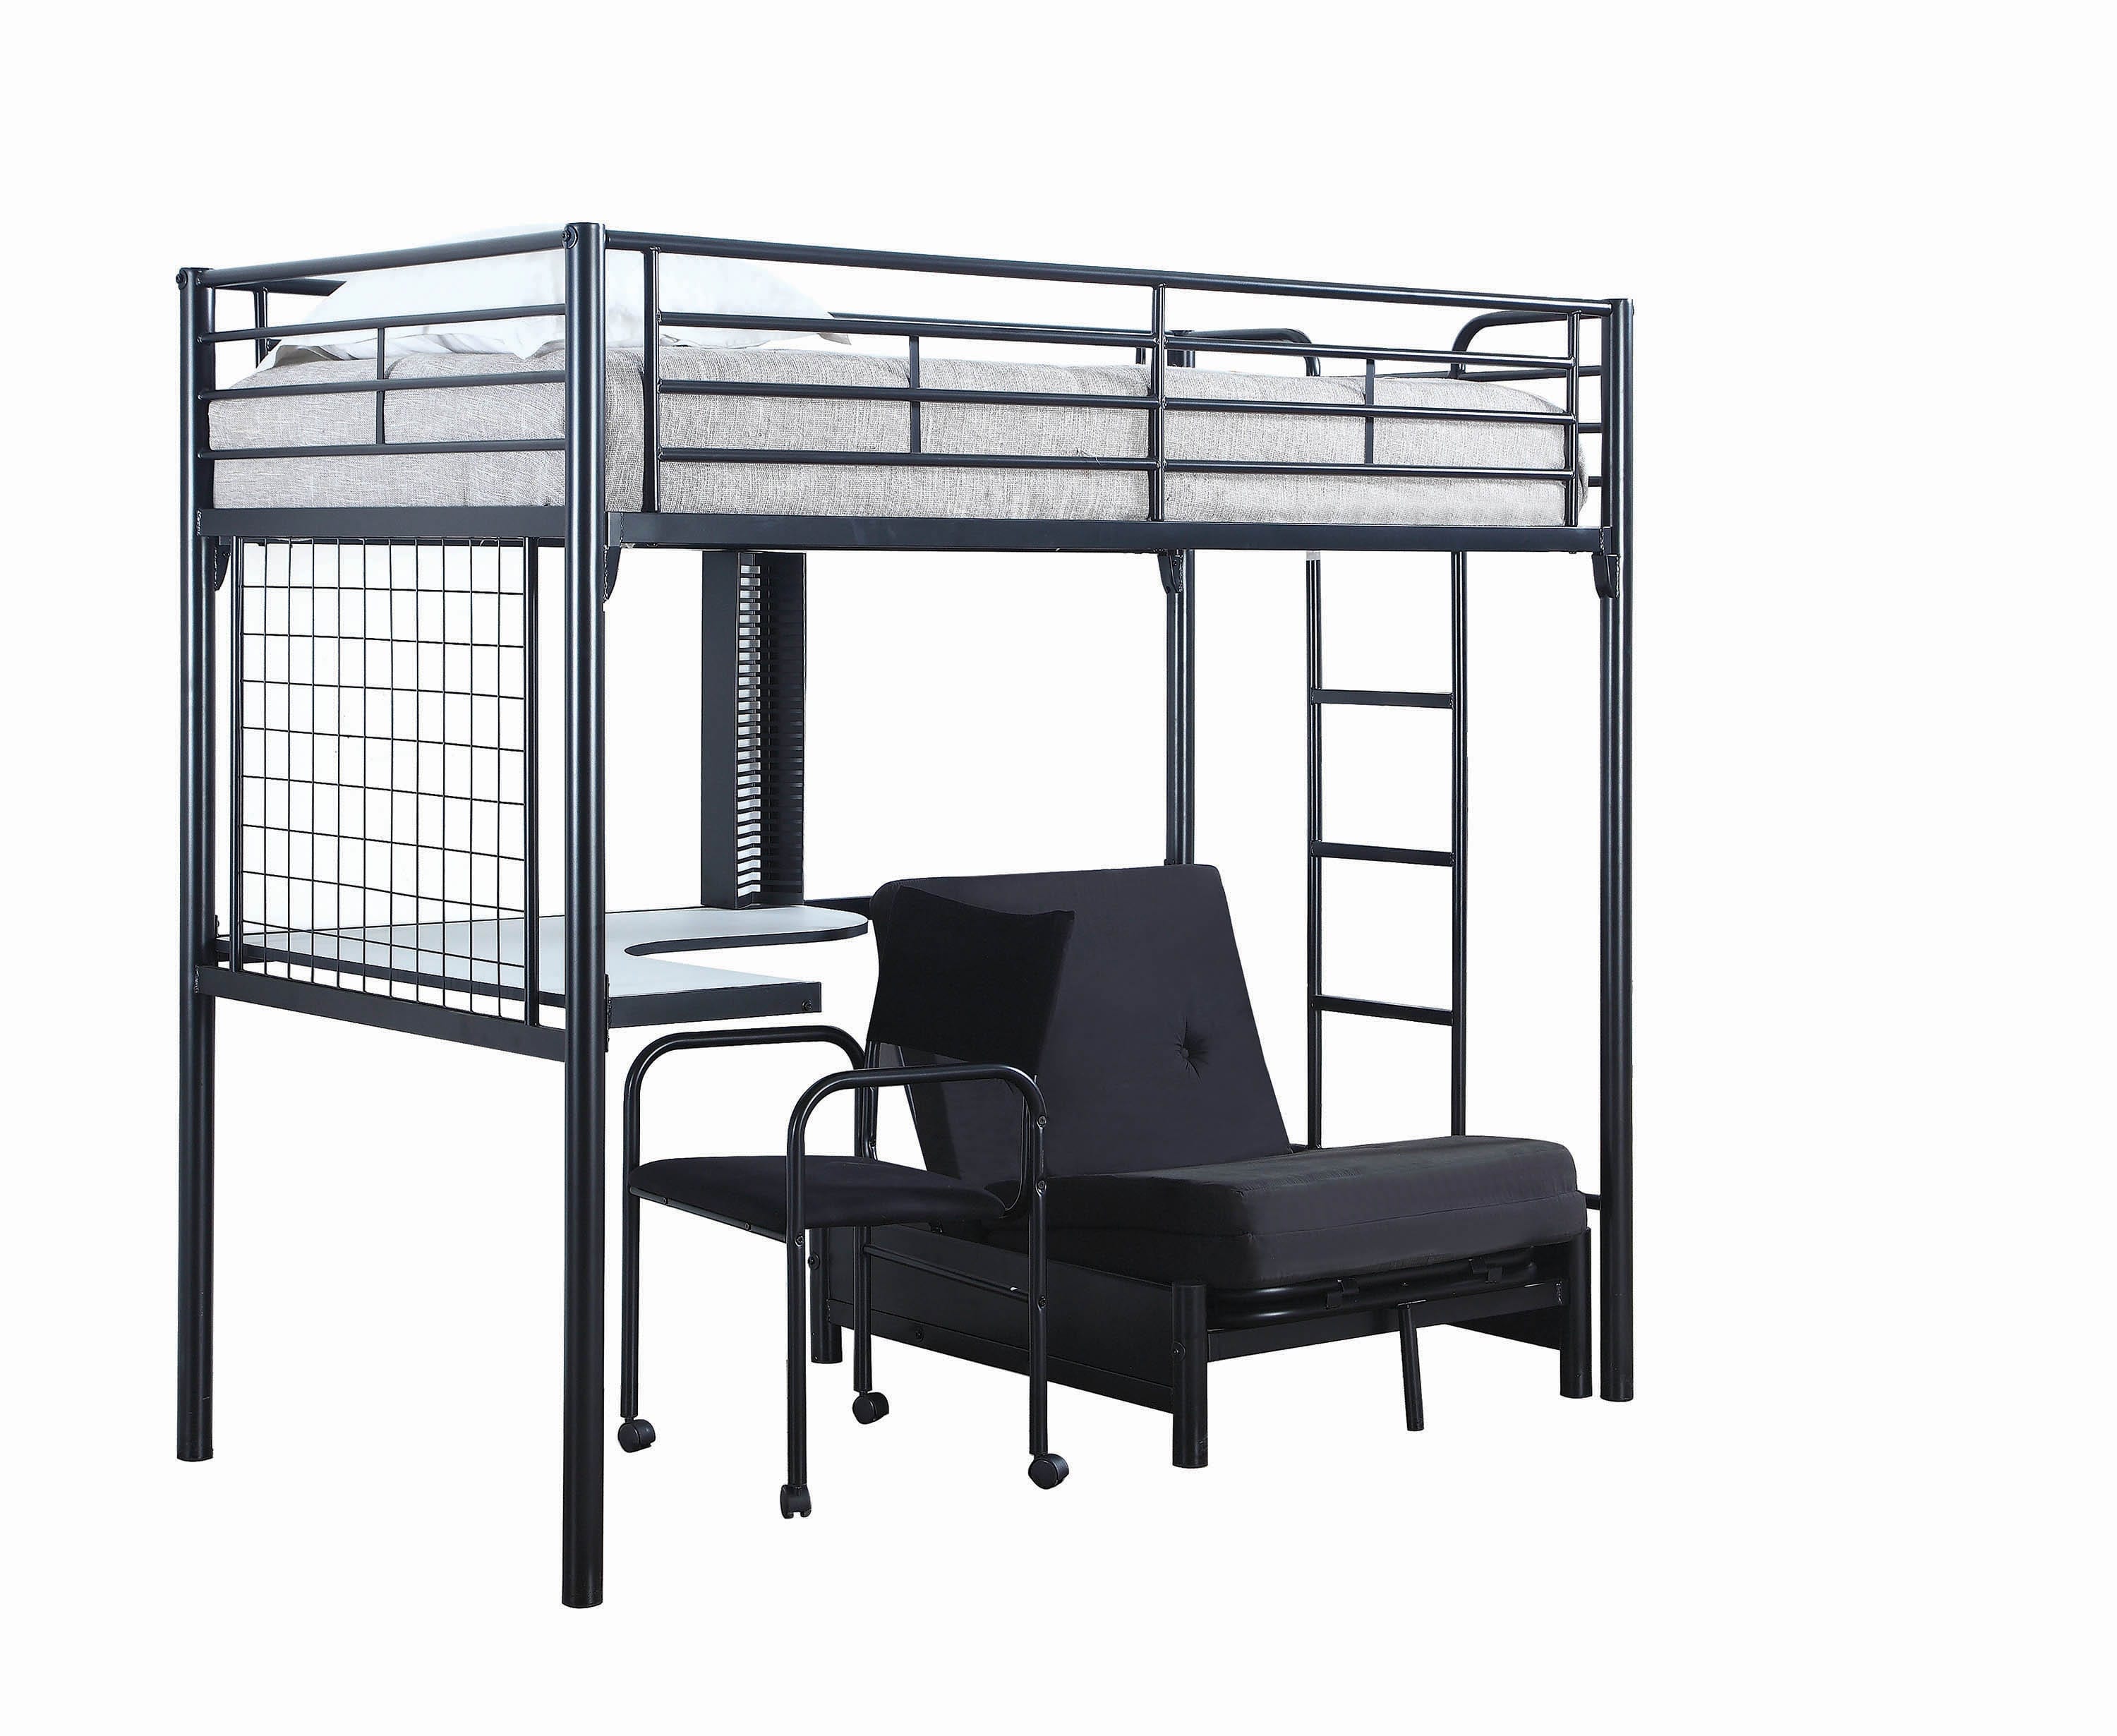 Jenner Futon Contemporary Metal Loft Bunk Bed W Desk By Coaster